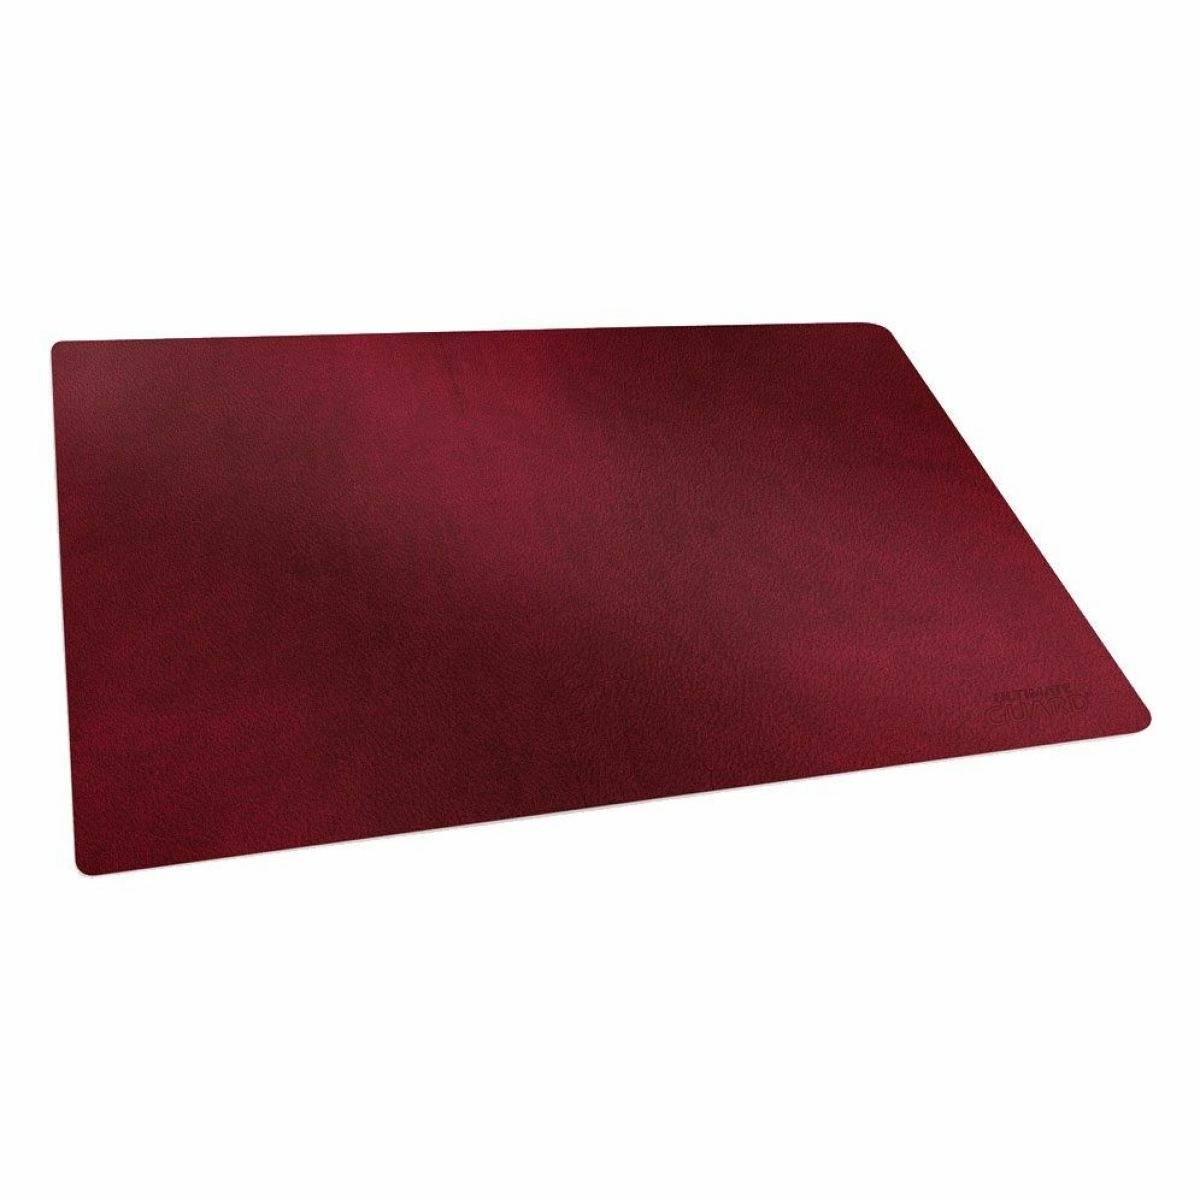 Ultimate Guard Playmat Sophoskin Dark Red 61 X 35cm